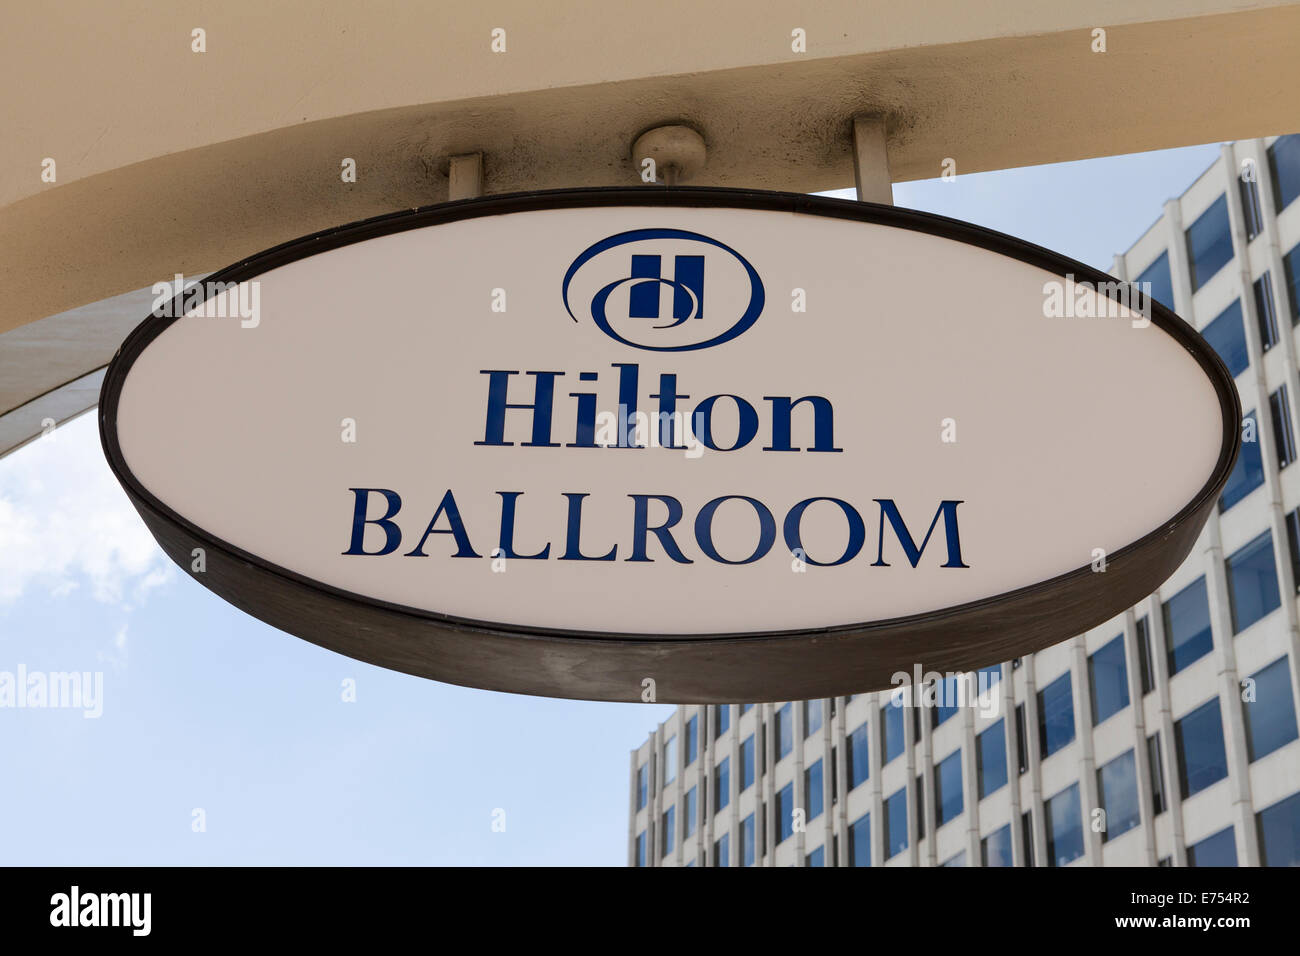 Hilton Ballroom sign - Washington, DC USA Stock Photo